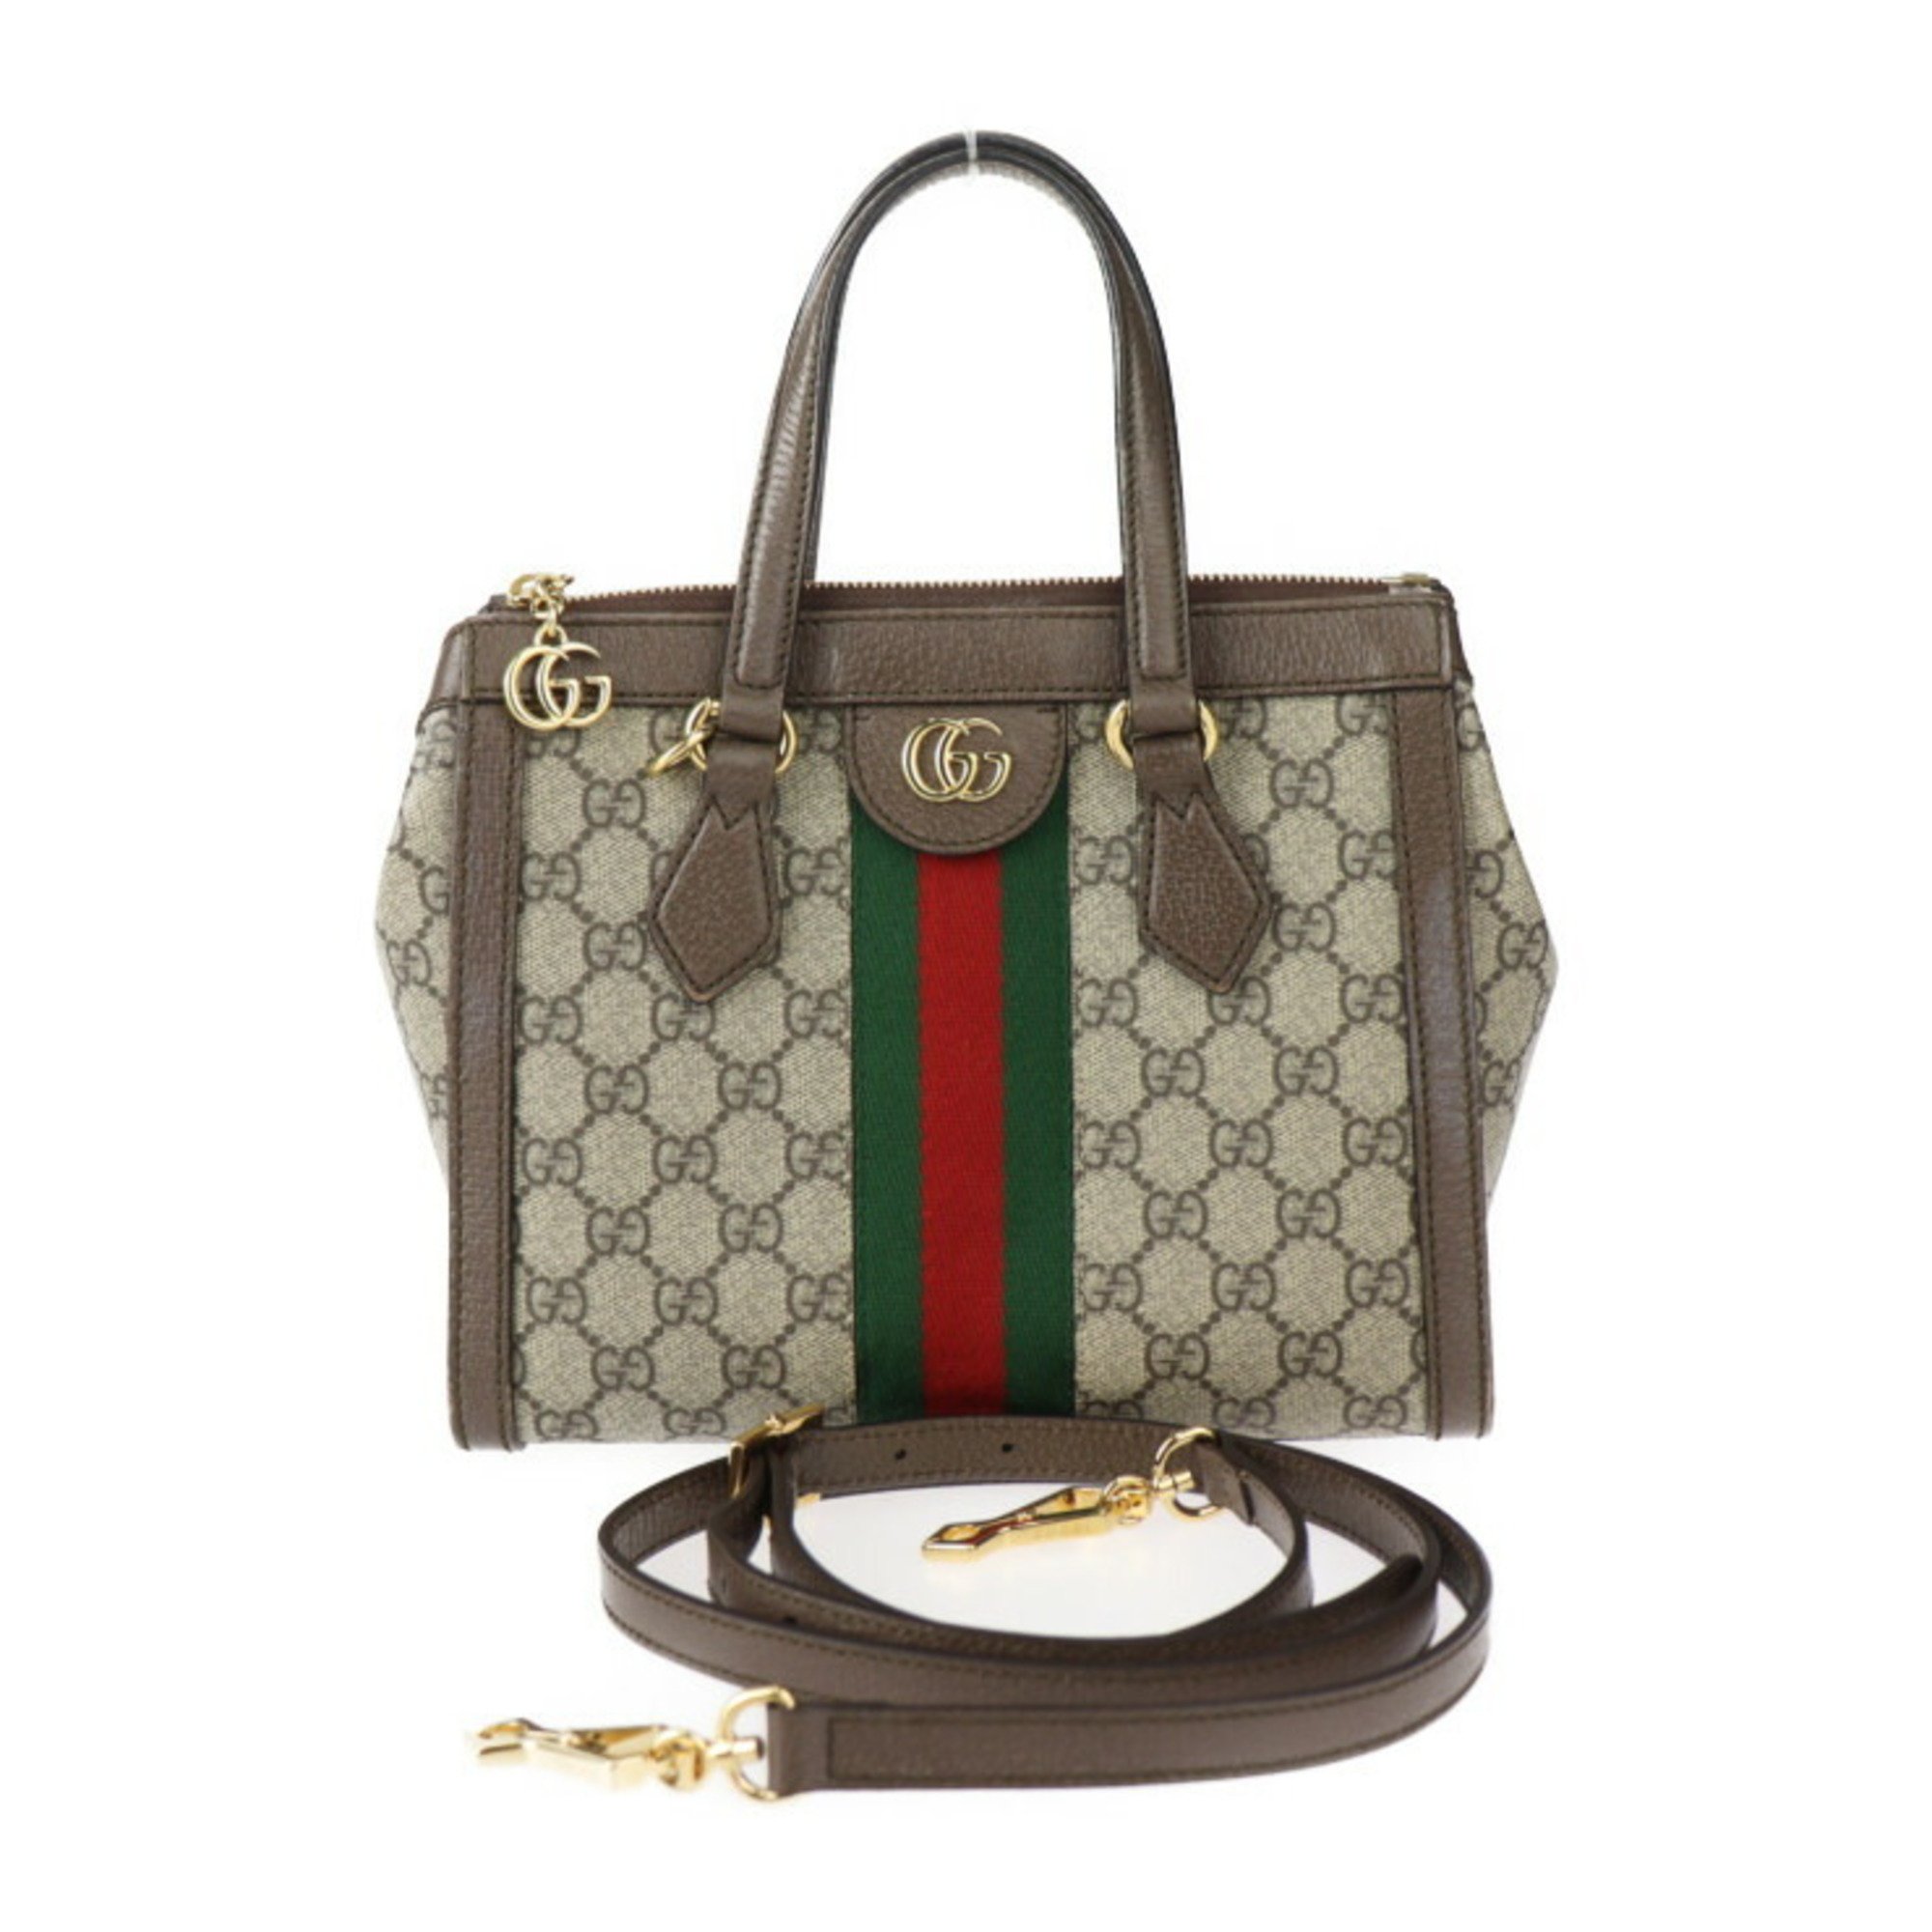 GUCCI Gucci GG Small Tote Bag Sherry Line Handbag 547551 Supreme Canvas Leather Beige Brown Shoulder